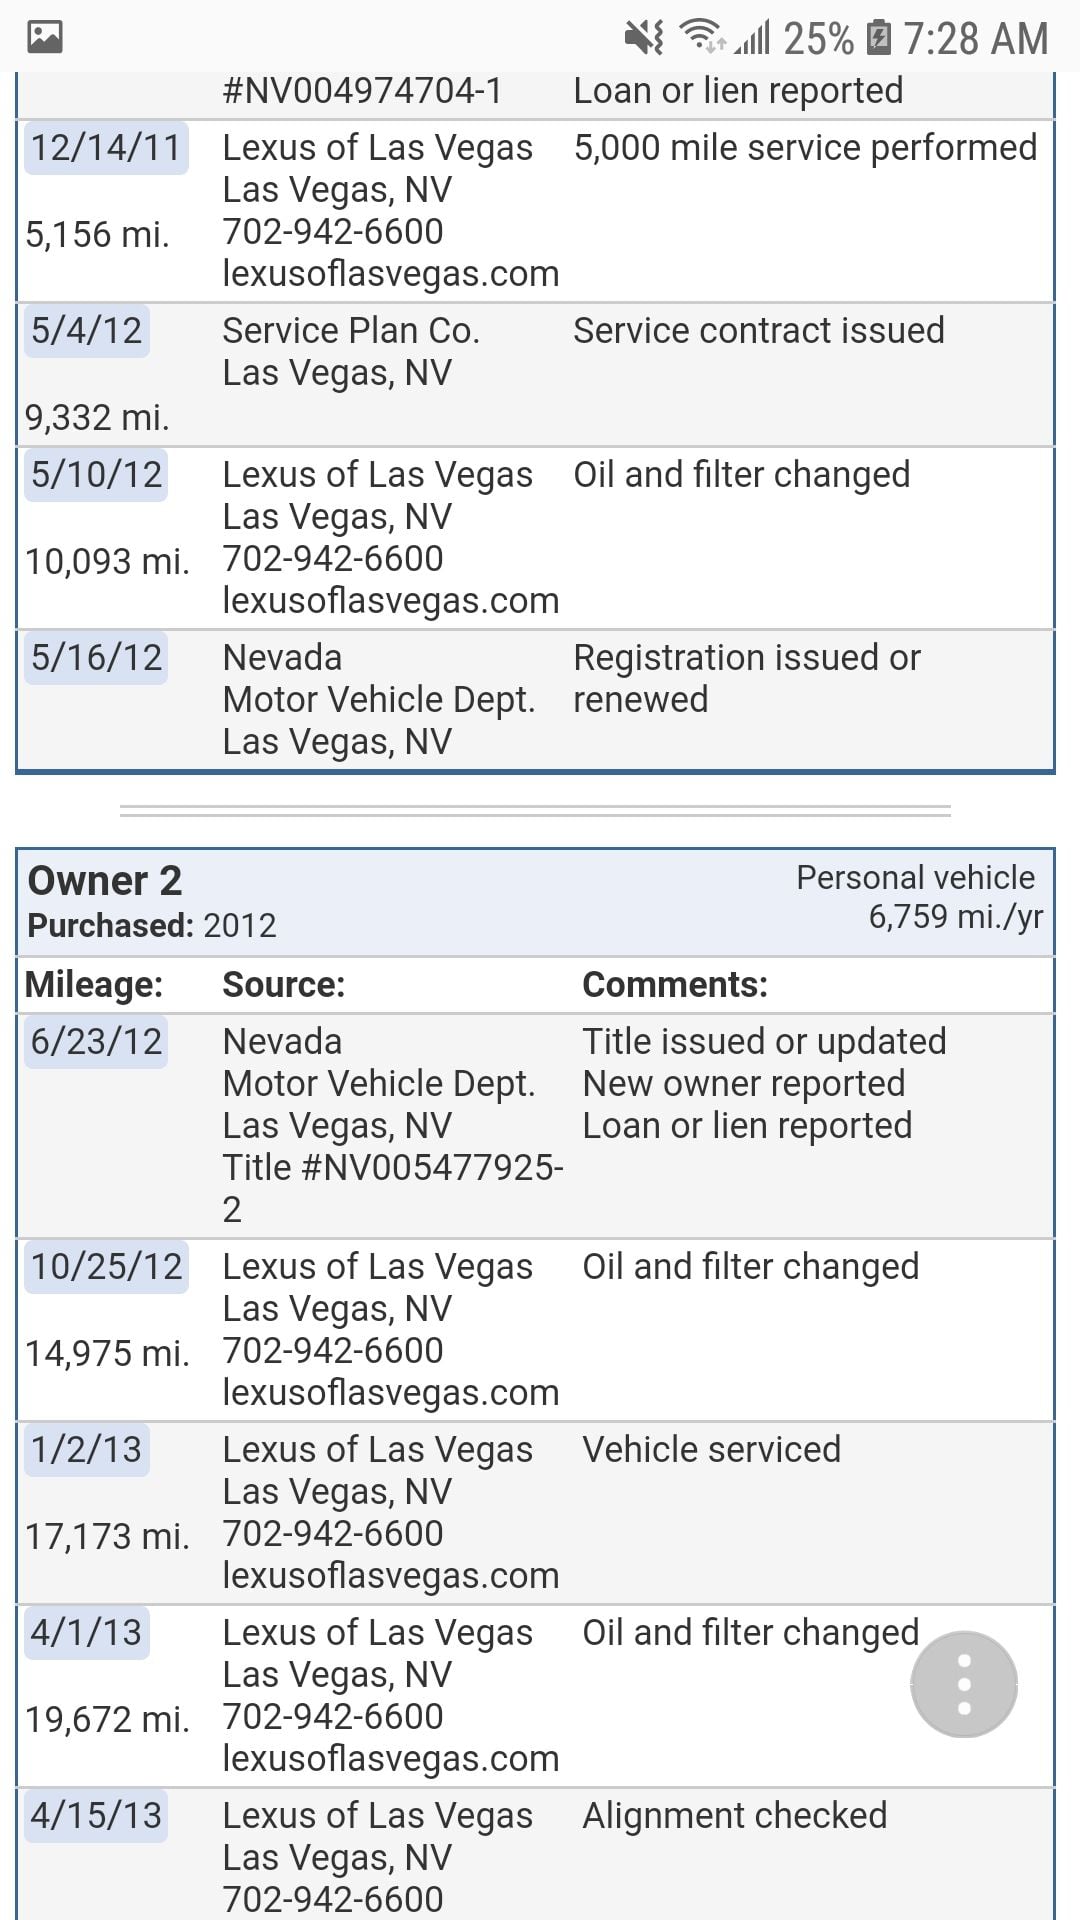 2011 Lexus IS F - AZ 2011 IS F 54k miles. Silver and black interior - Used - VIN JTHBP5C25B5009540 - 55,330 Miles - 8 cyl - 2WD - Automatic - Sedan - Silver - Phoenix, AZ AZ, United States